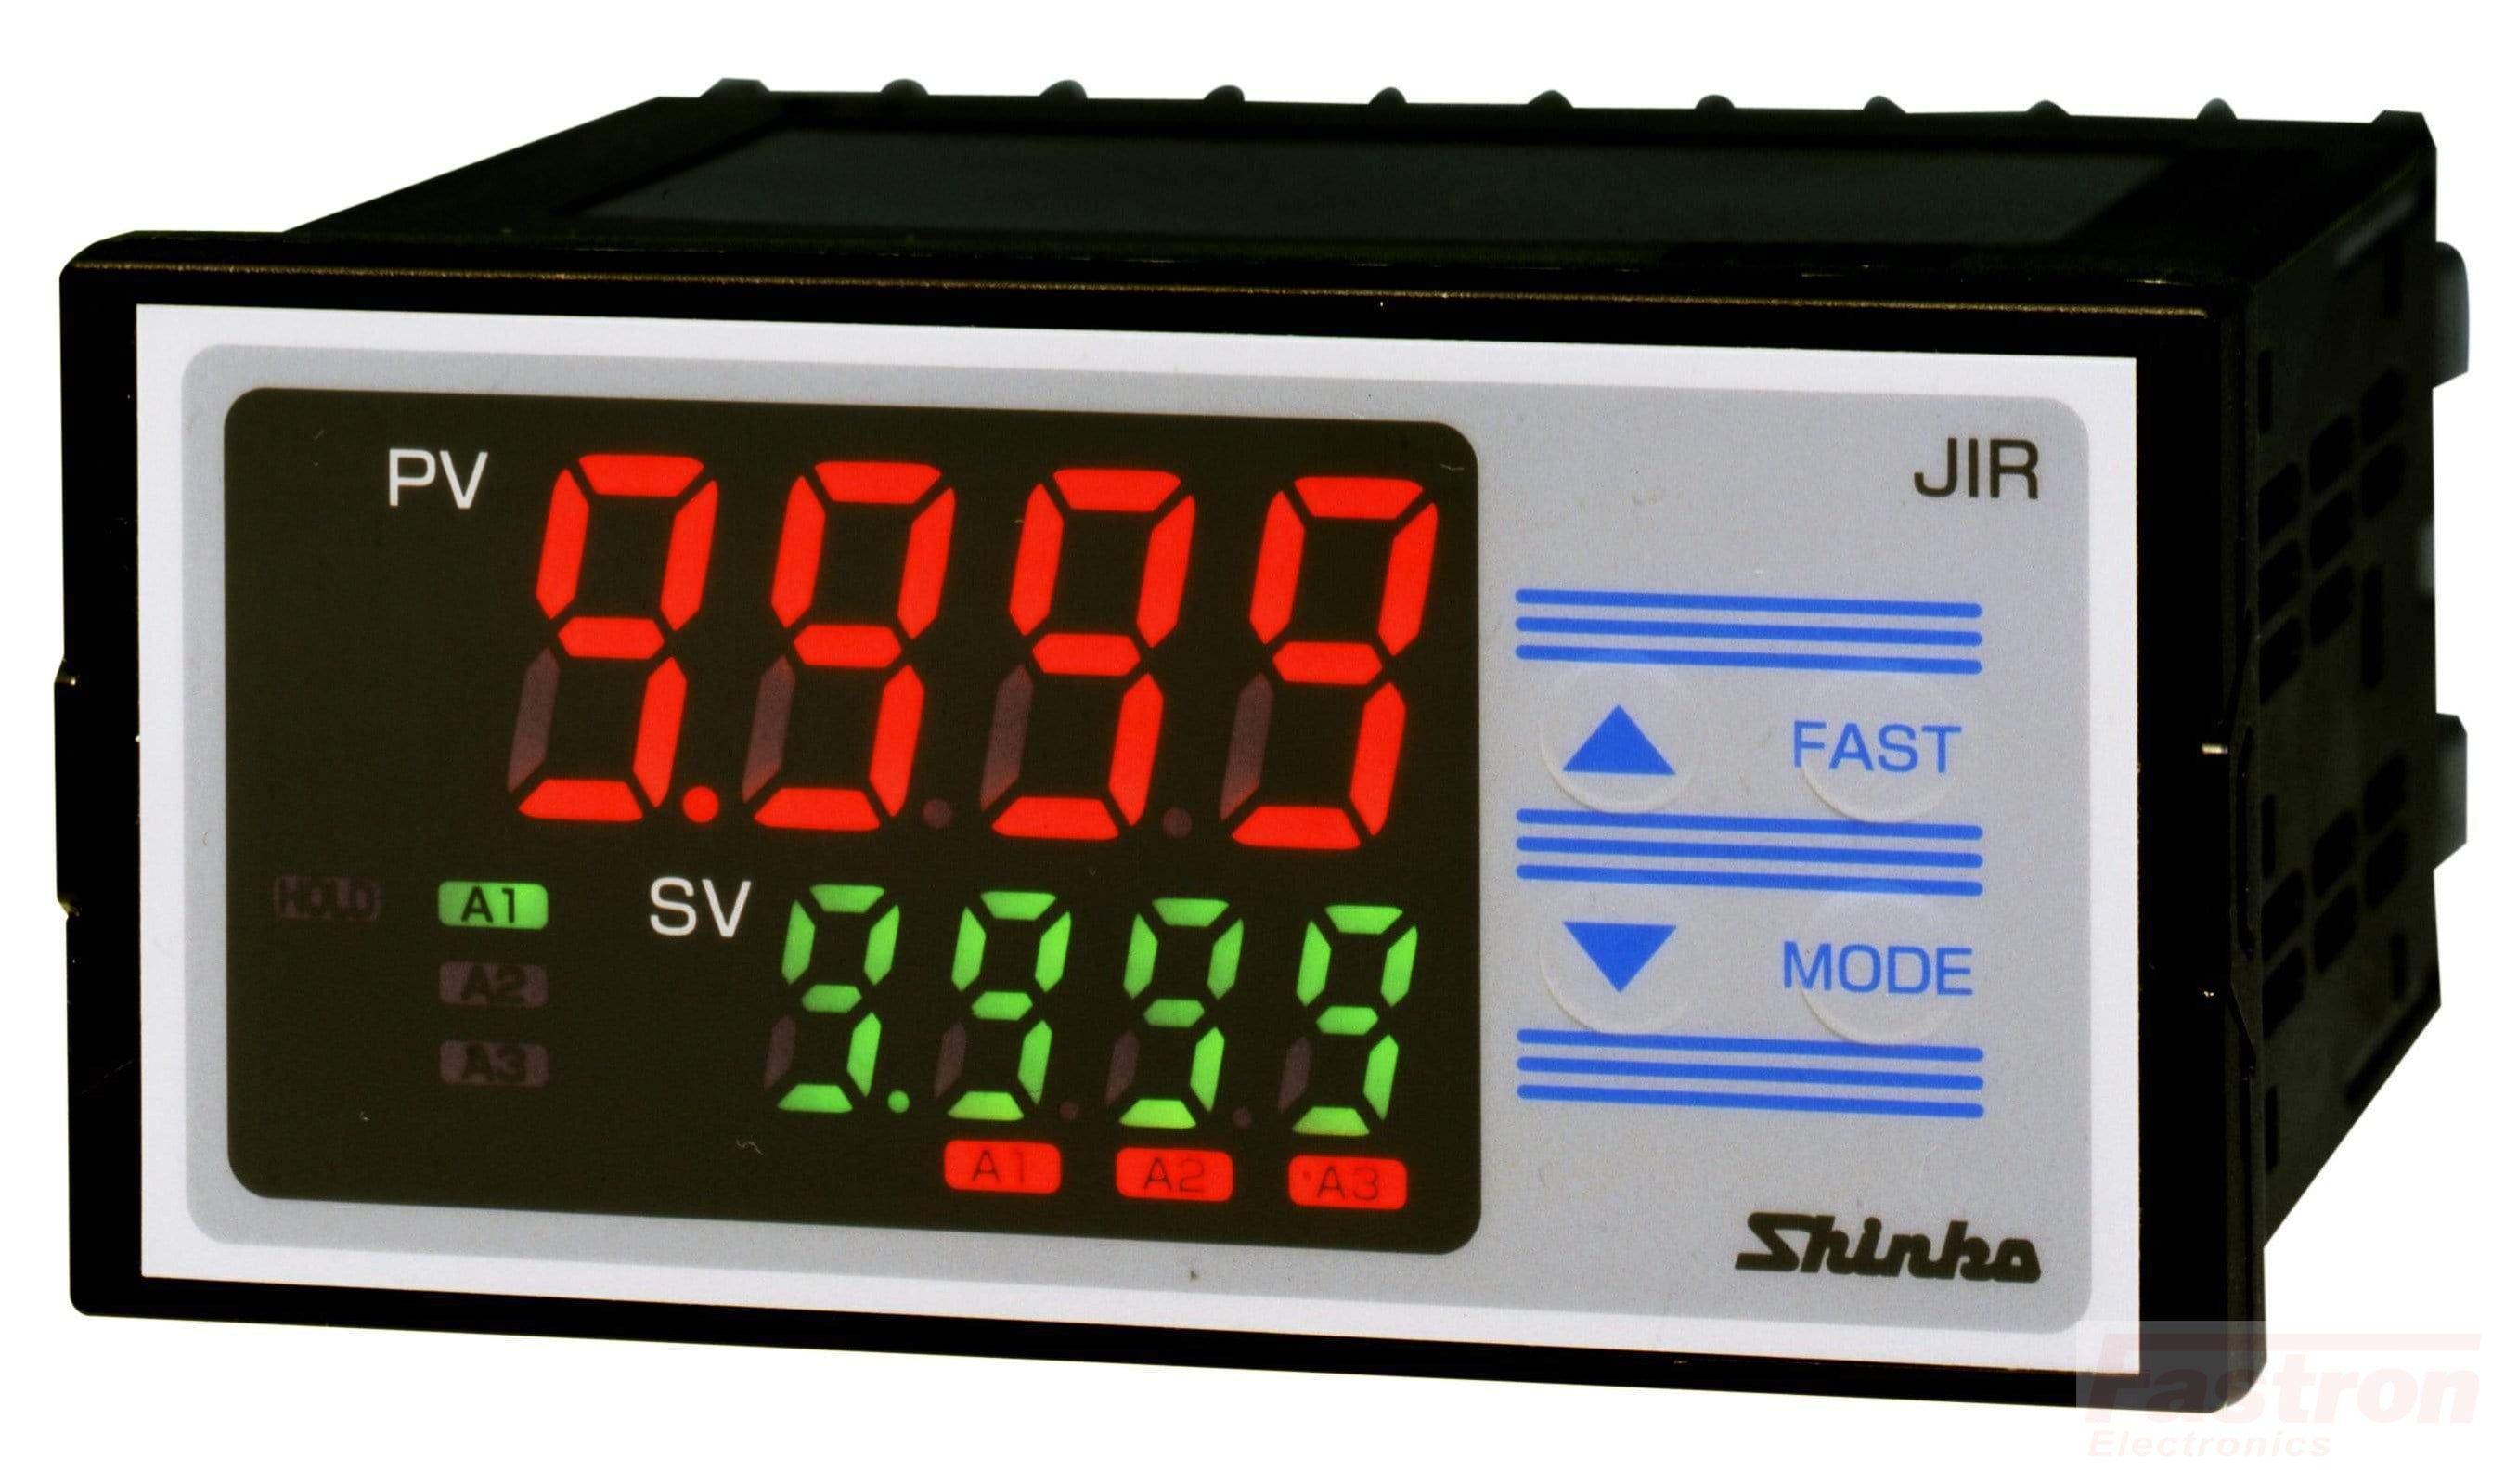 JIR301M Indicator, 48x96mm, 100-240VAC, 3 Alarm outputs, 4-20mA Retransmission